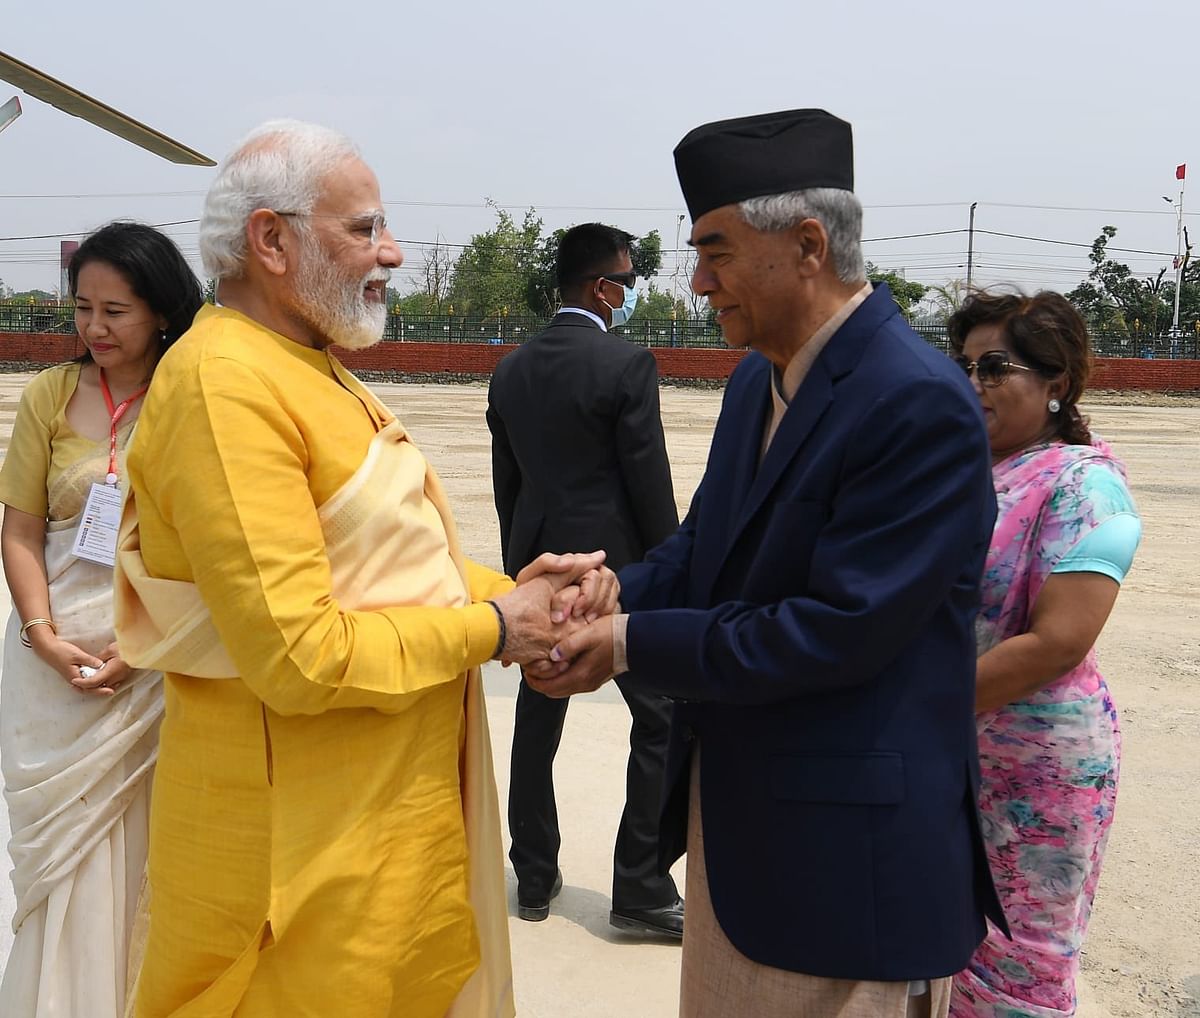 Earlier, PM Modi and Nepal PM Deuba offered prayers at the Mahamayadevi Temple in Lumbini.